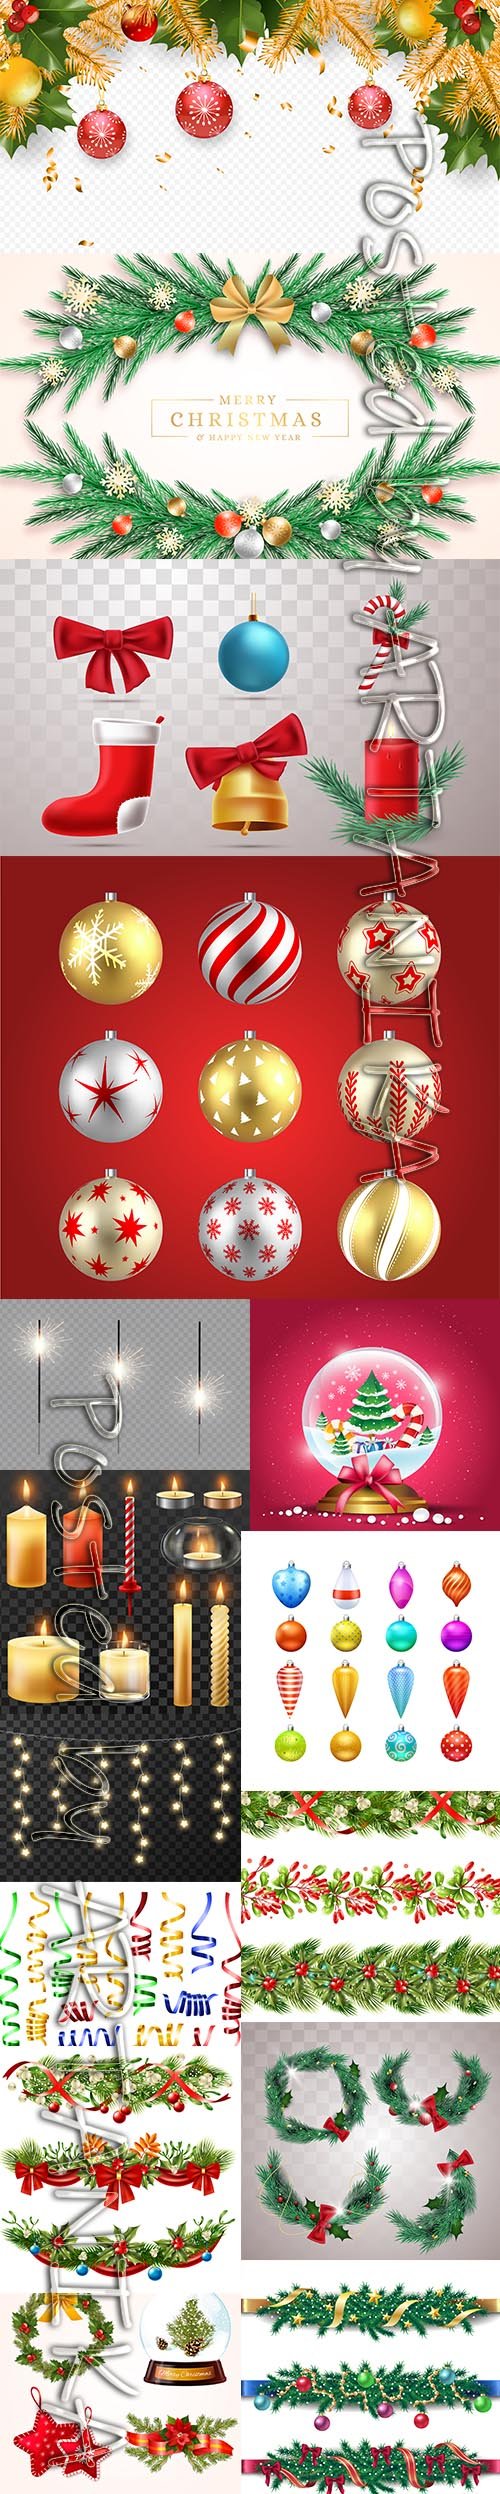 Big Set of Christmas Elegant Decorations and Backgrounds Vol 2